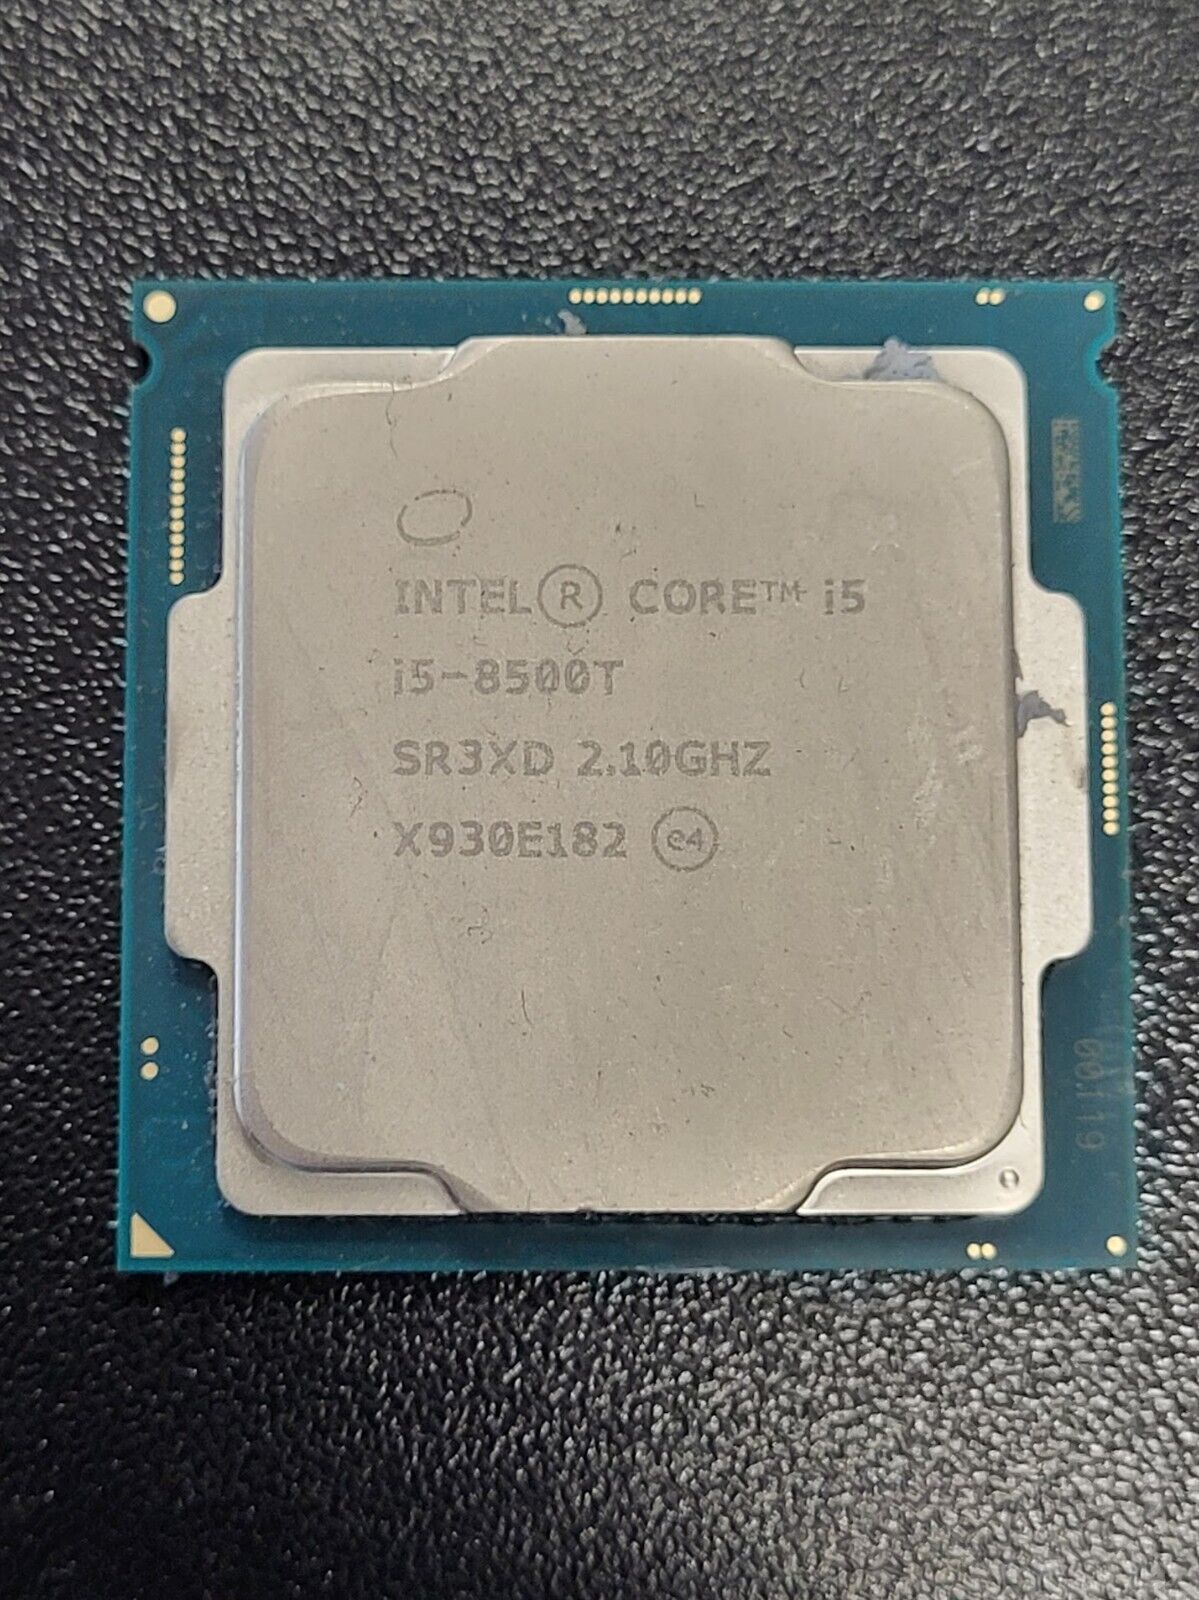 Intel Core i5-8500T Processor 2.10GHz LGA1151 SR3XD #73